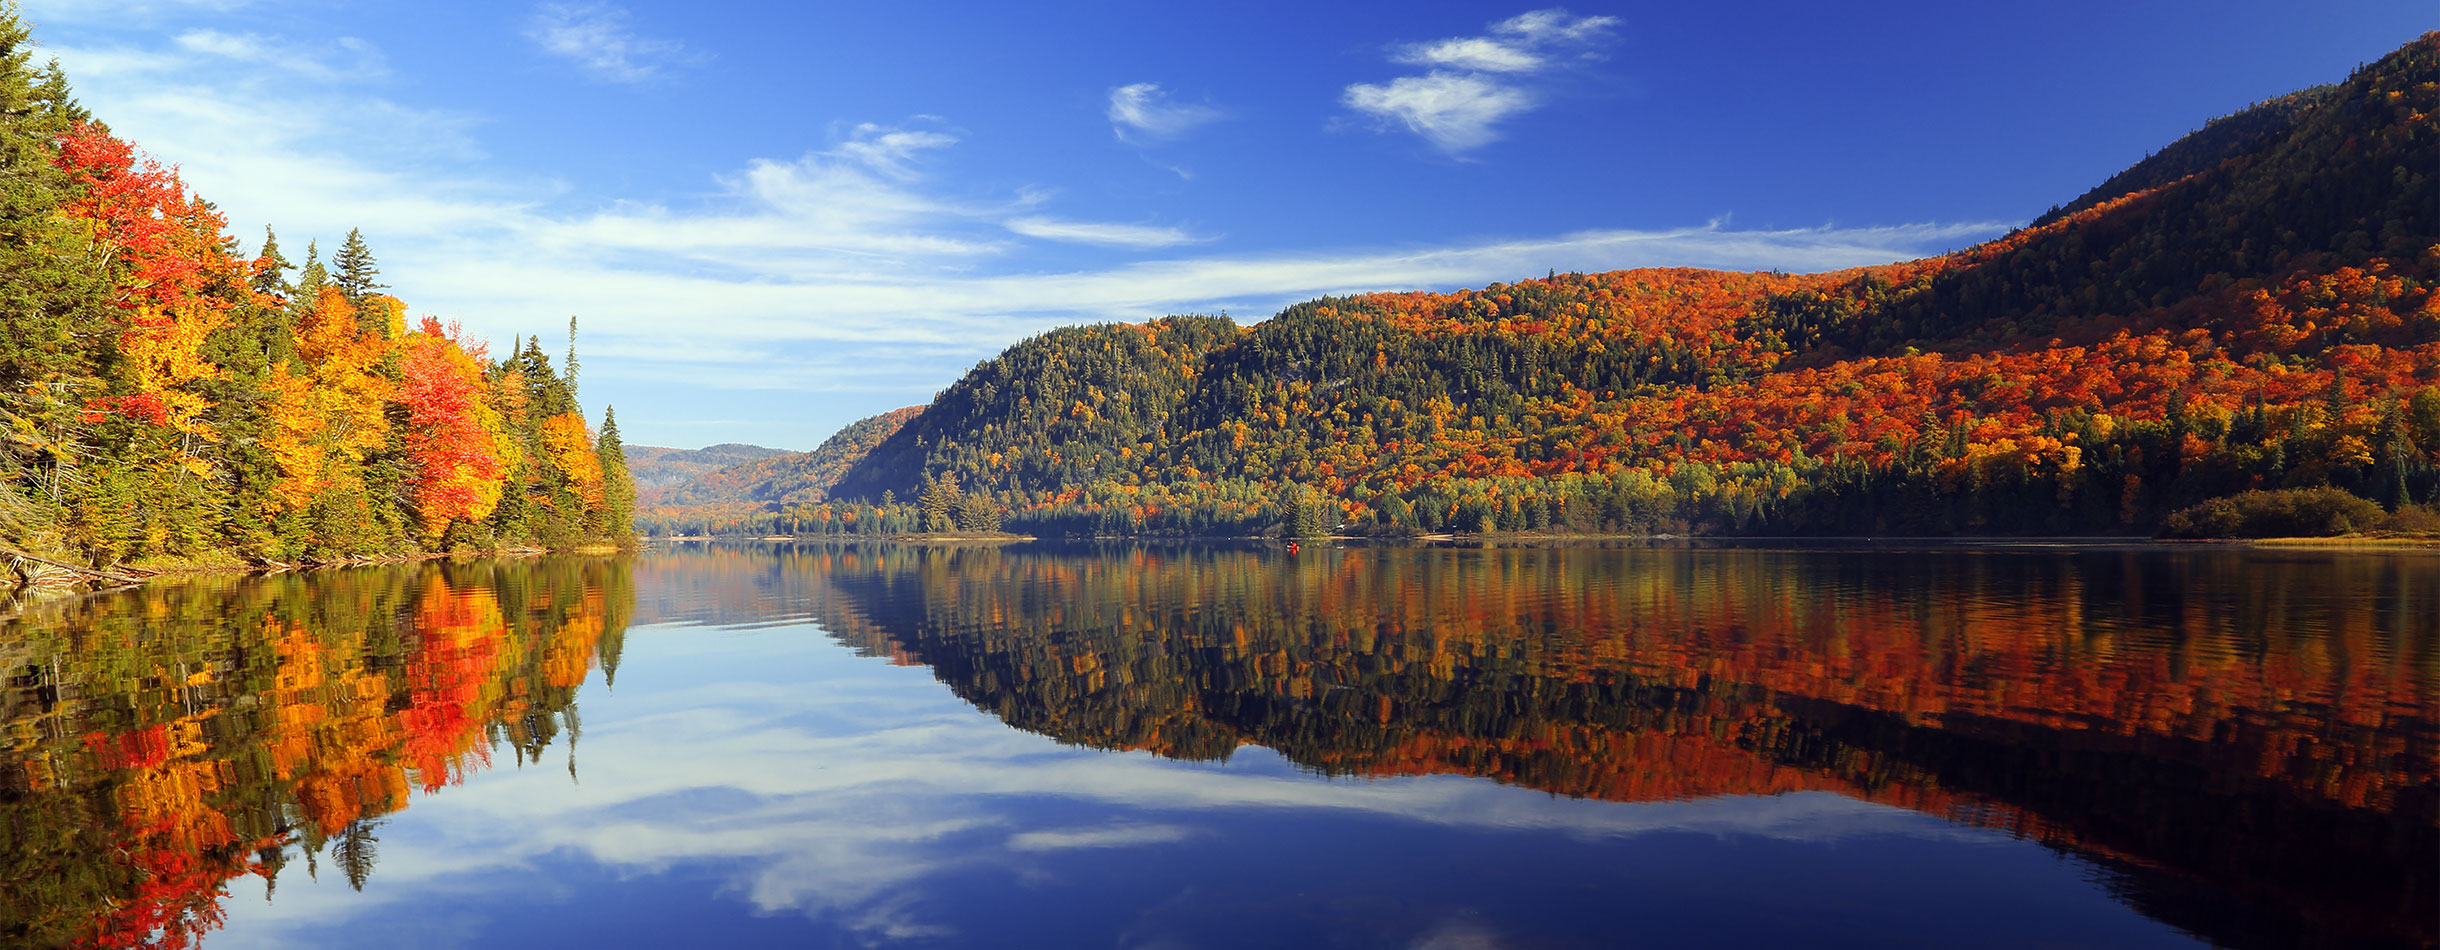 Parc national Mont Tremblant. Quebec. Autumn in Canada